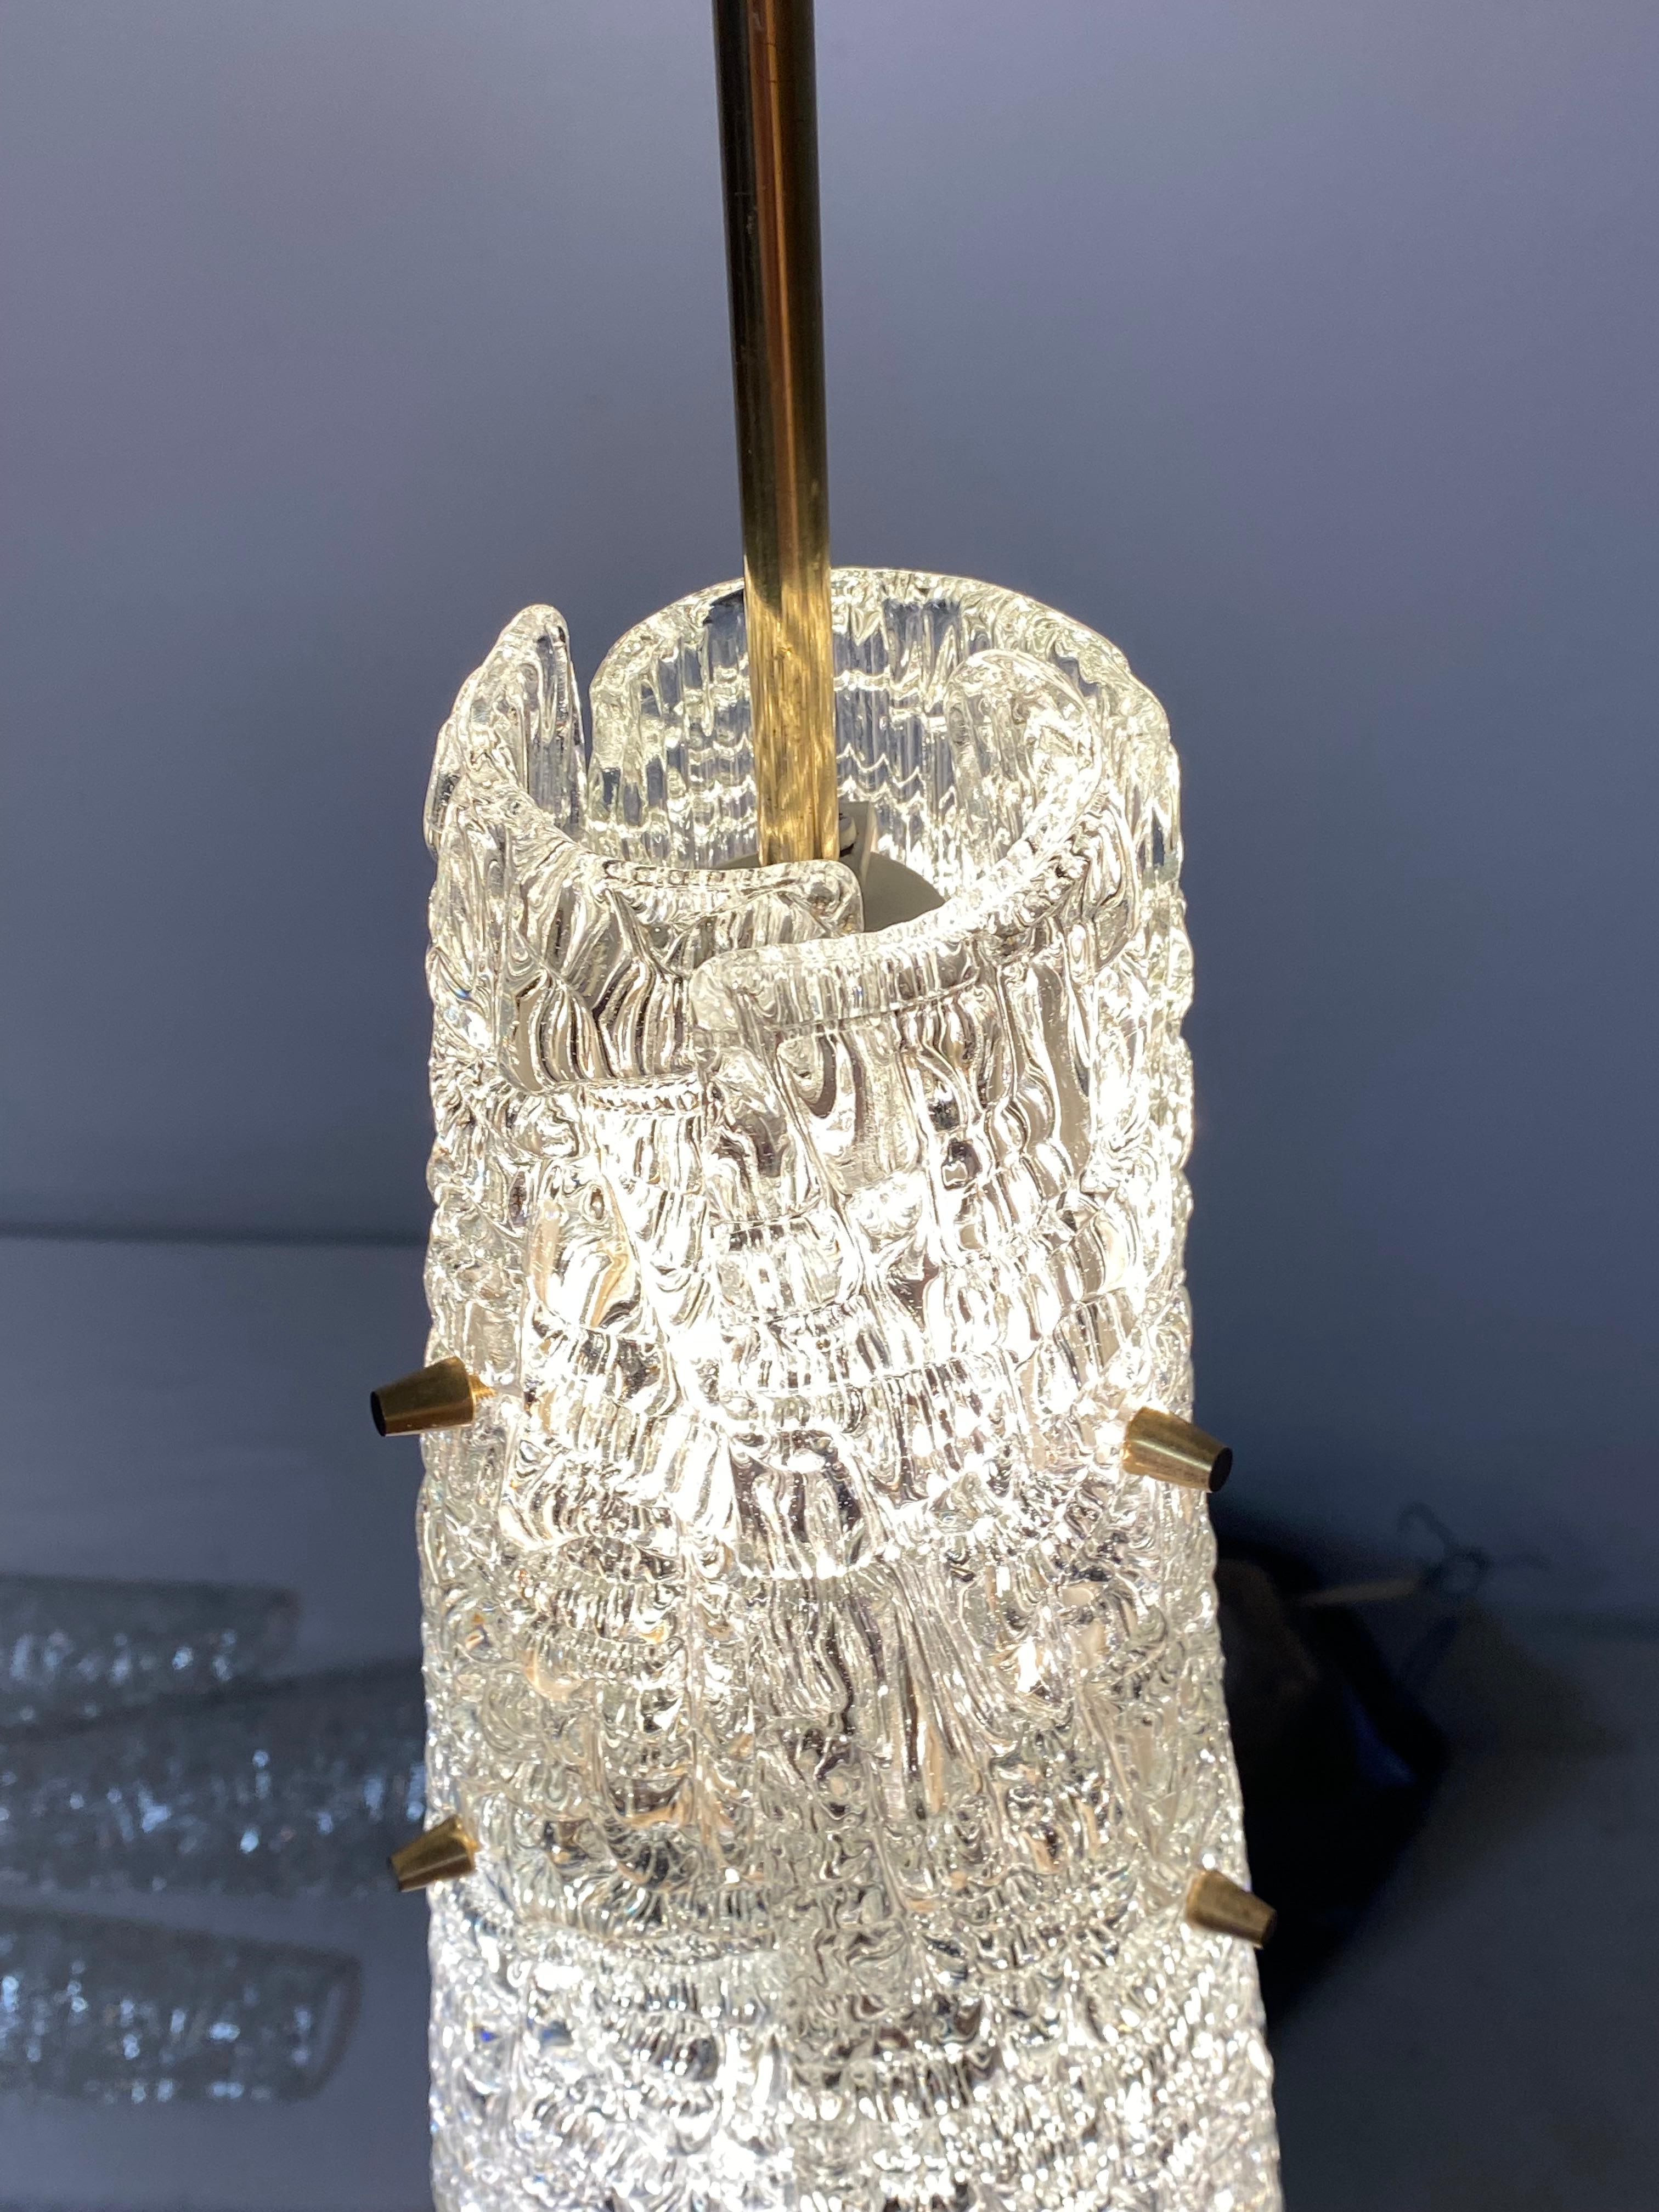 Midcentury J.T. Kalmar Crystal Glass Pendant Lamp For Sale 10